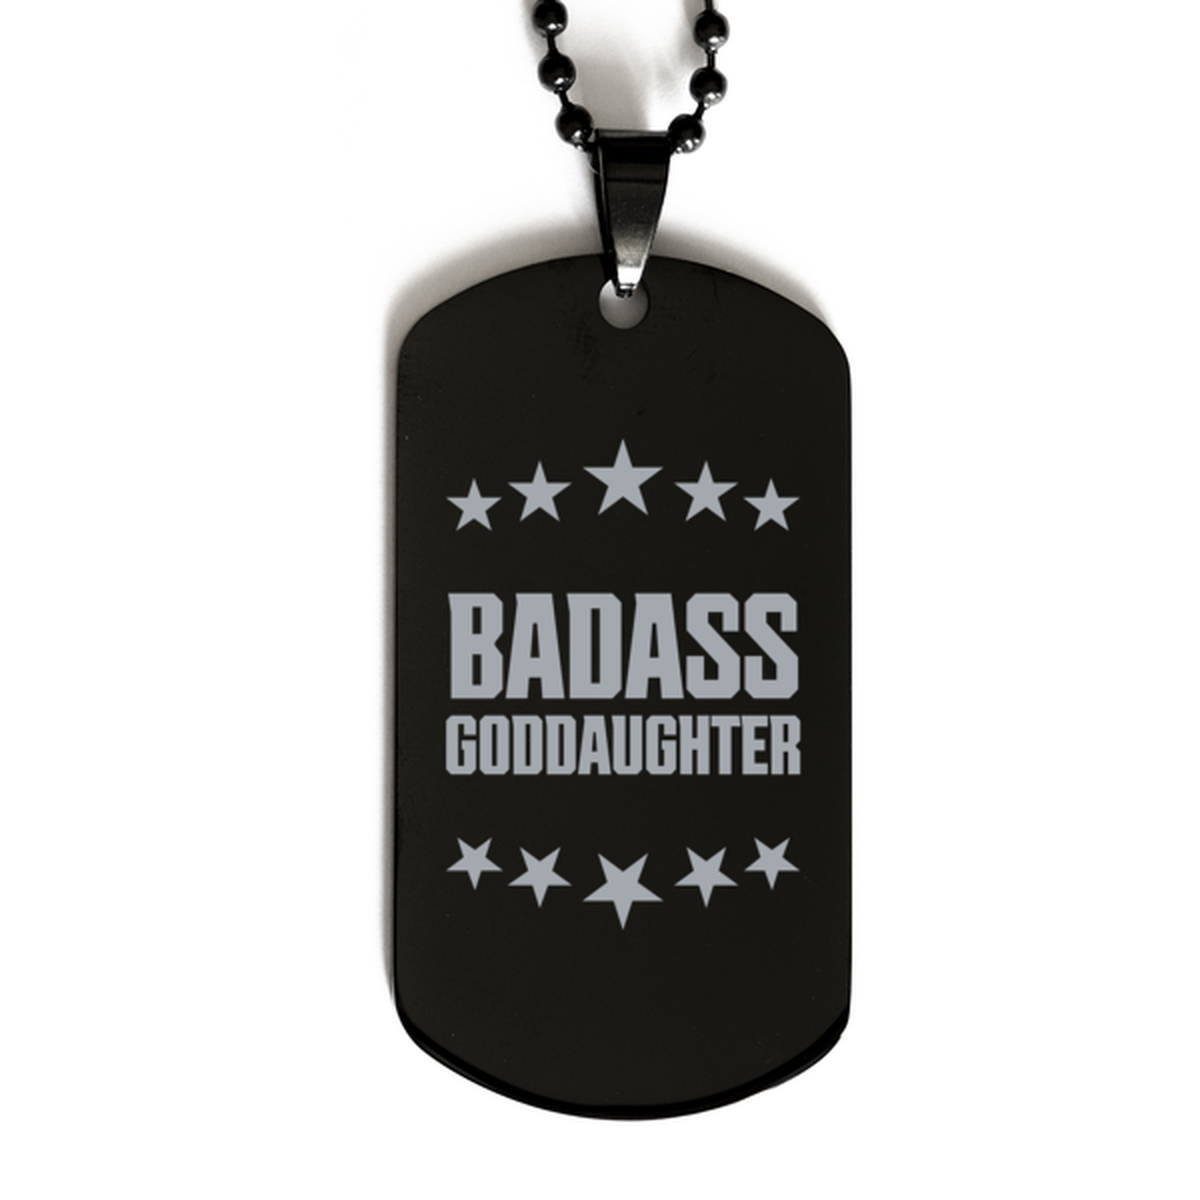 Goddaughter Black Dog Tag, Badass Goddaughter, Funny Family Gifts  Necklace For Goddaughter From Godparent